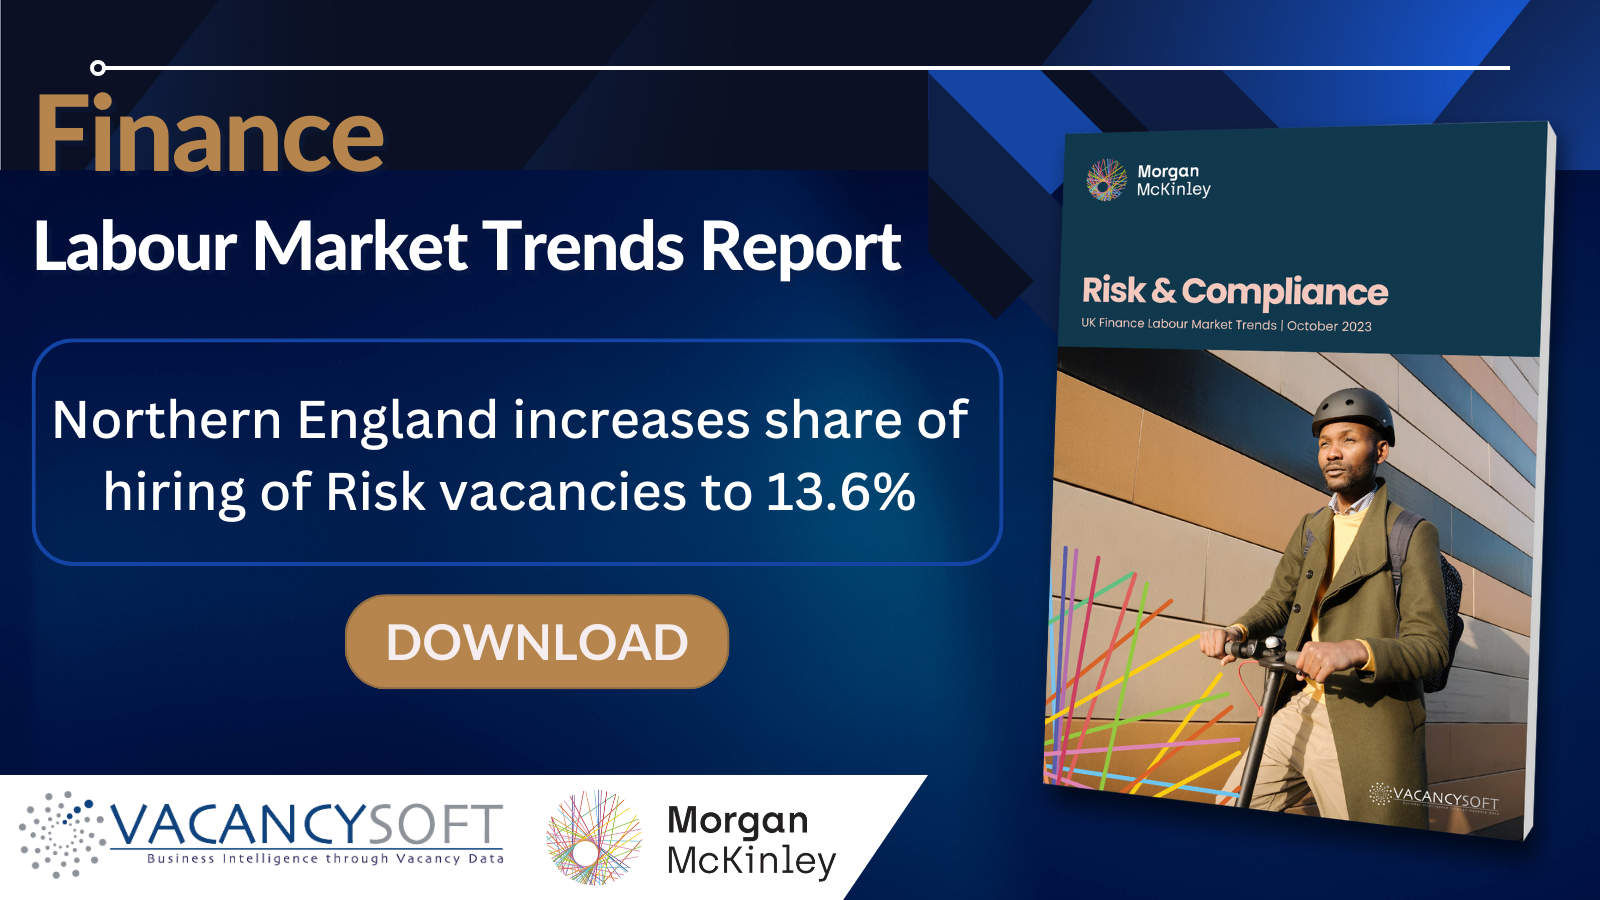 Risk & Compliance – UK Finance Labour Market Trends Report, October 2023